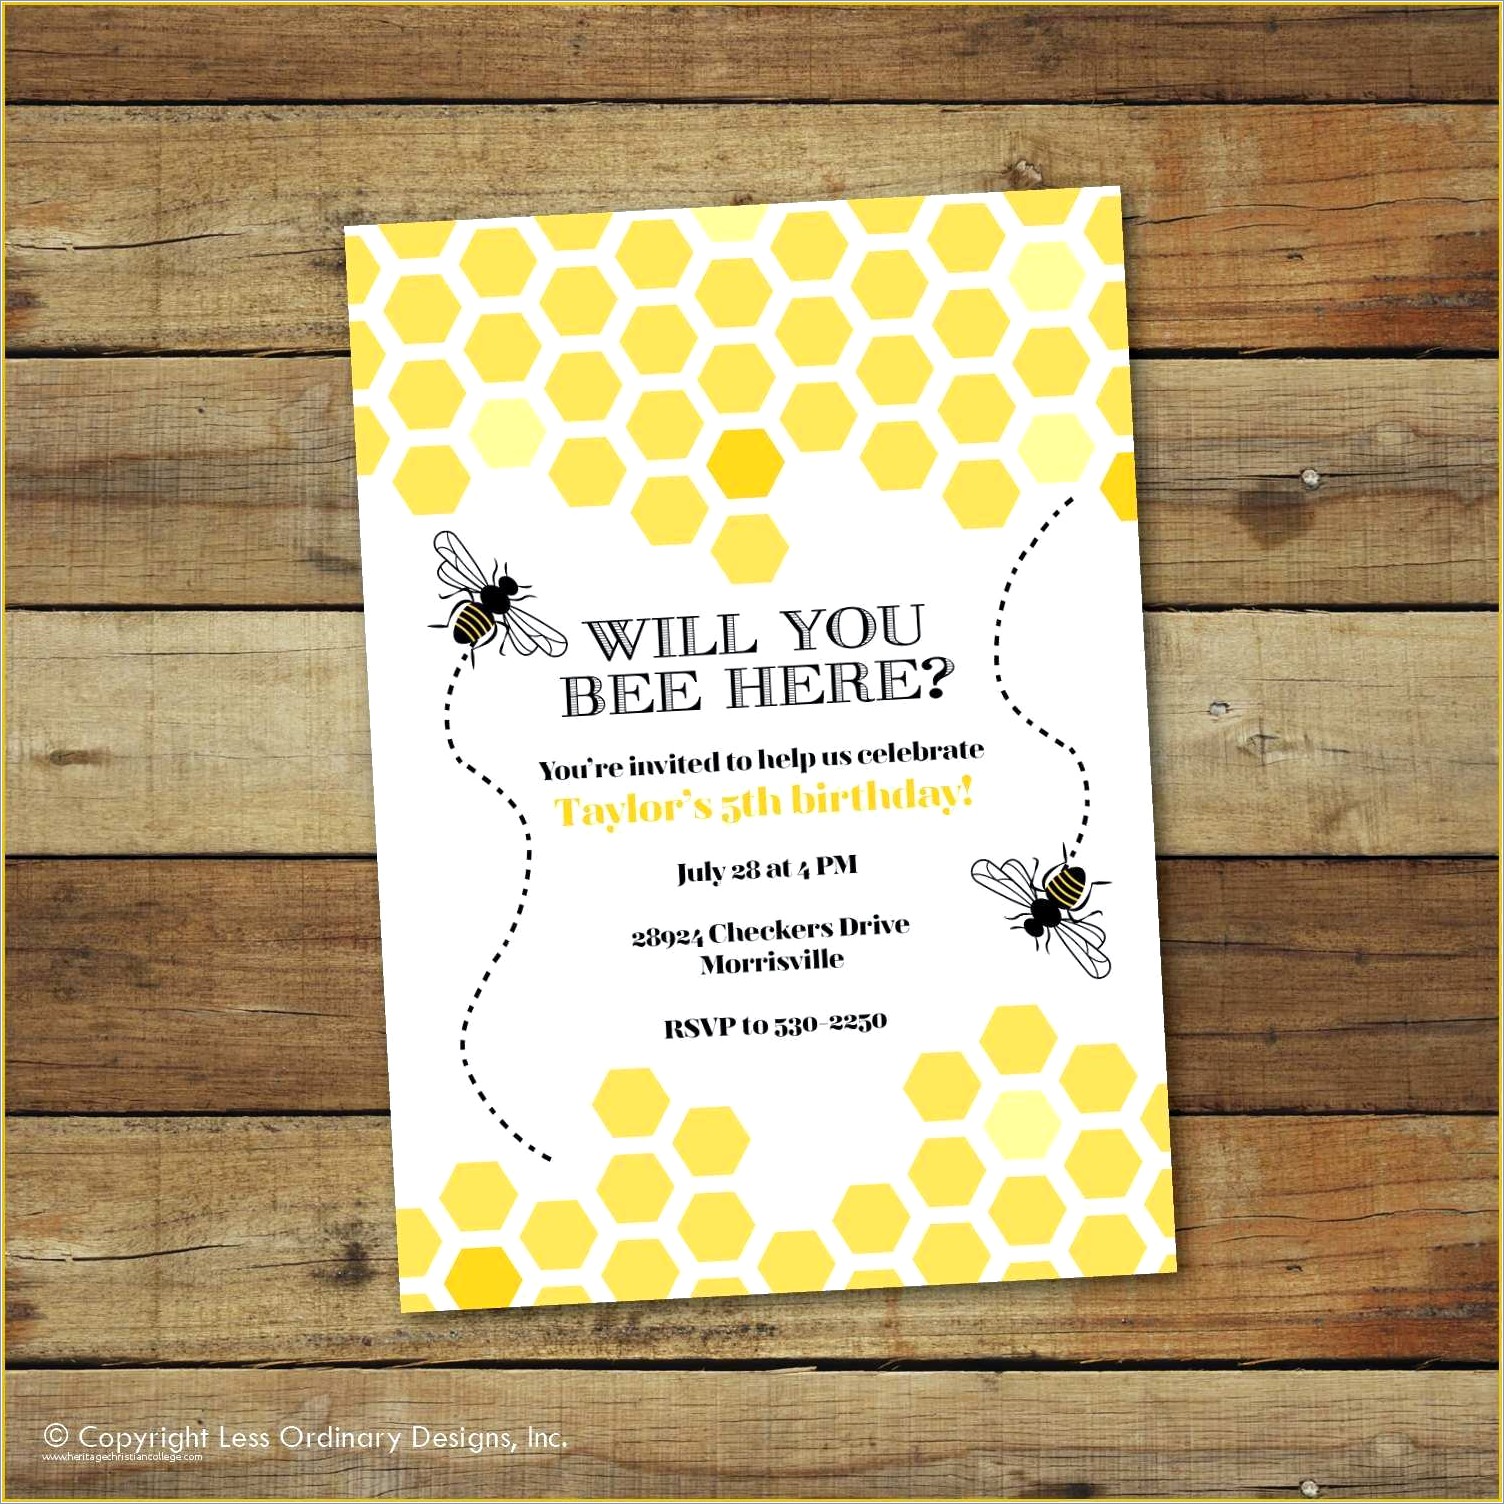 Bumble Bee Birthday Invitation Template Free